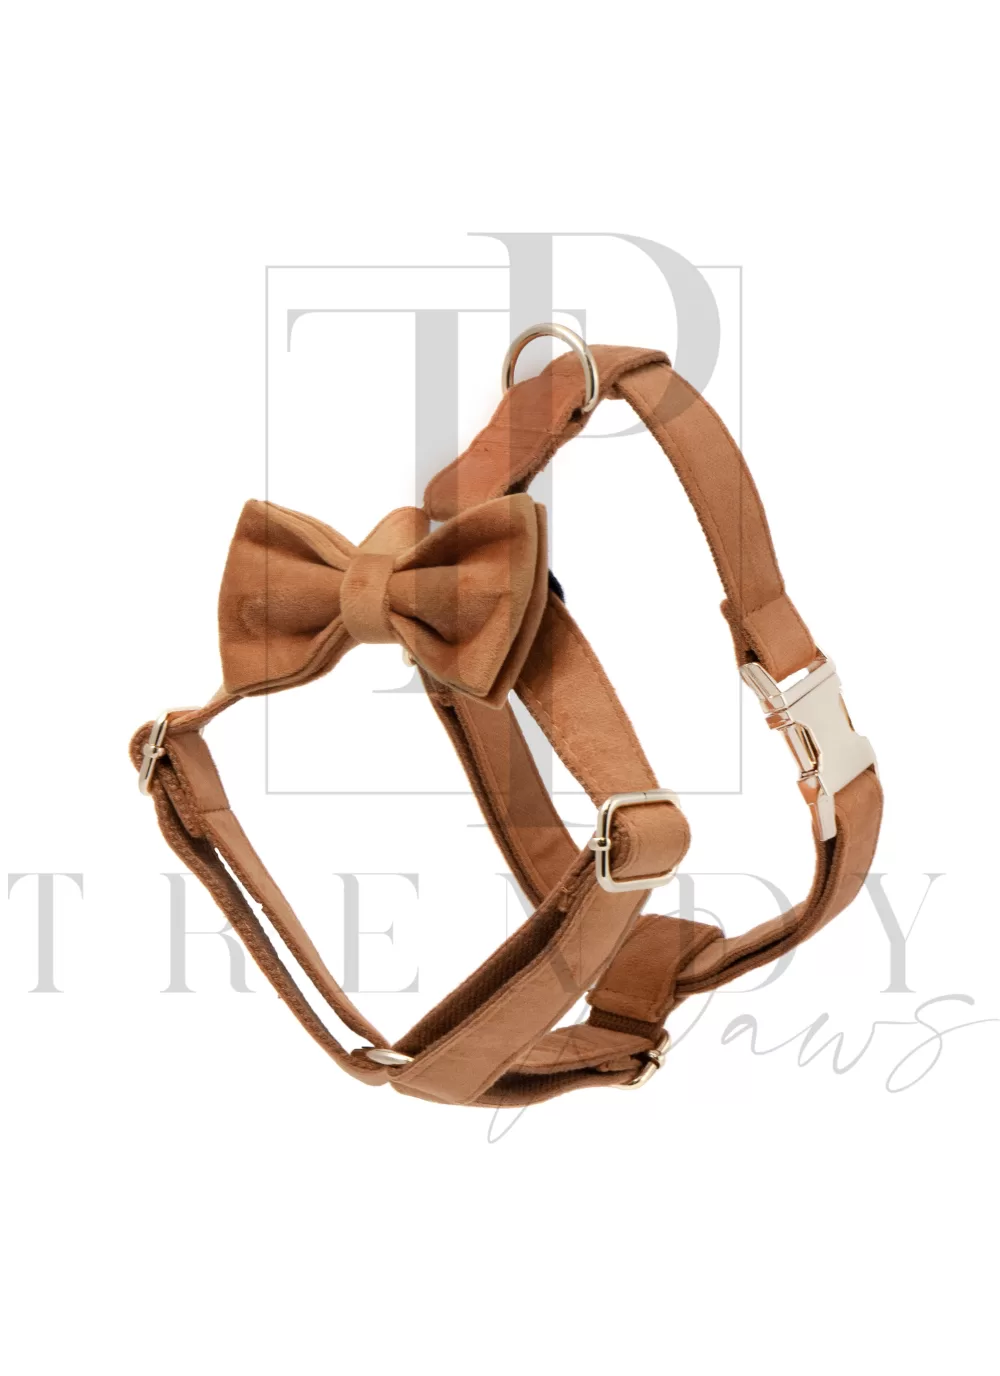 Caramel velvet soft dog harnesses harness bow ties